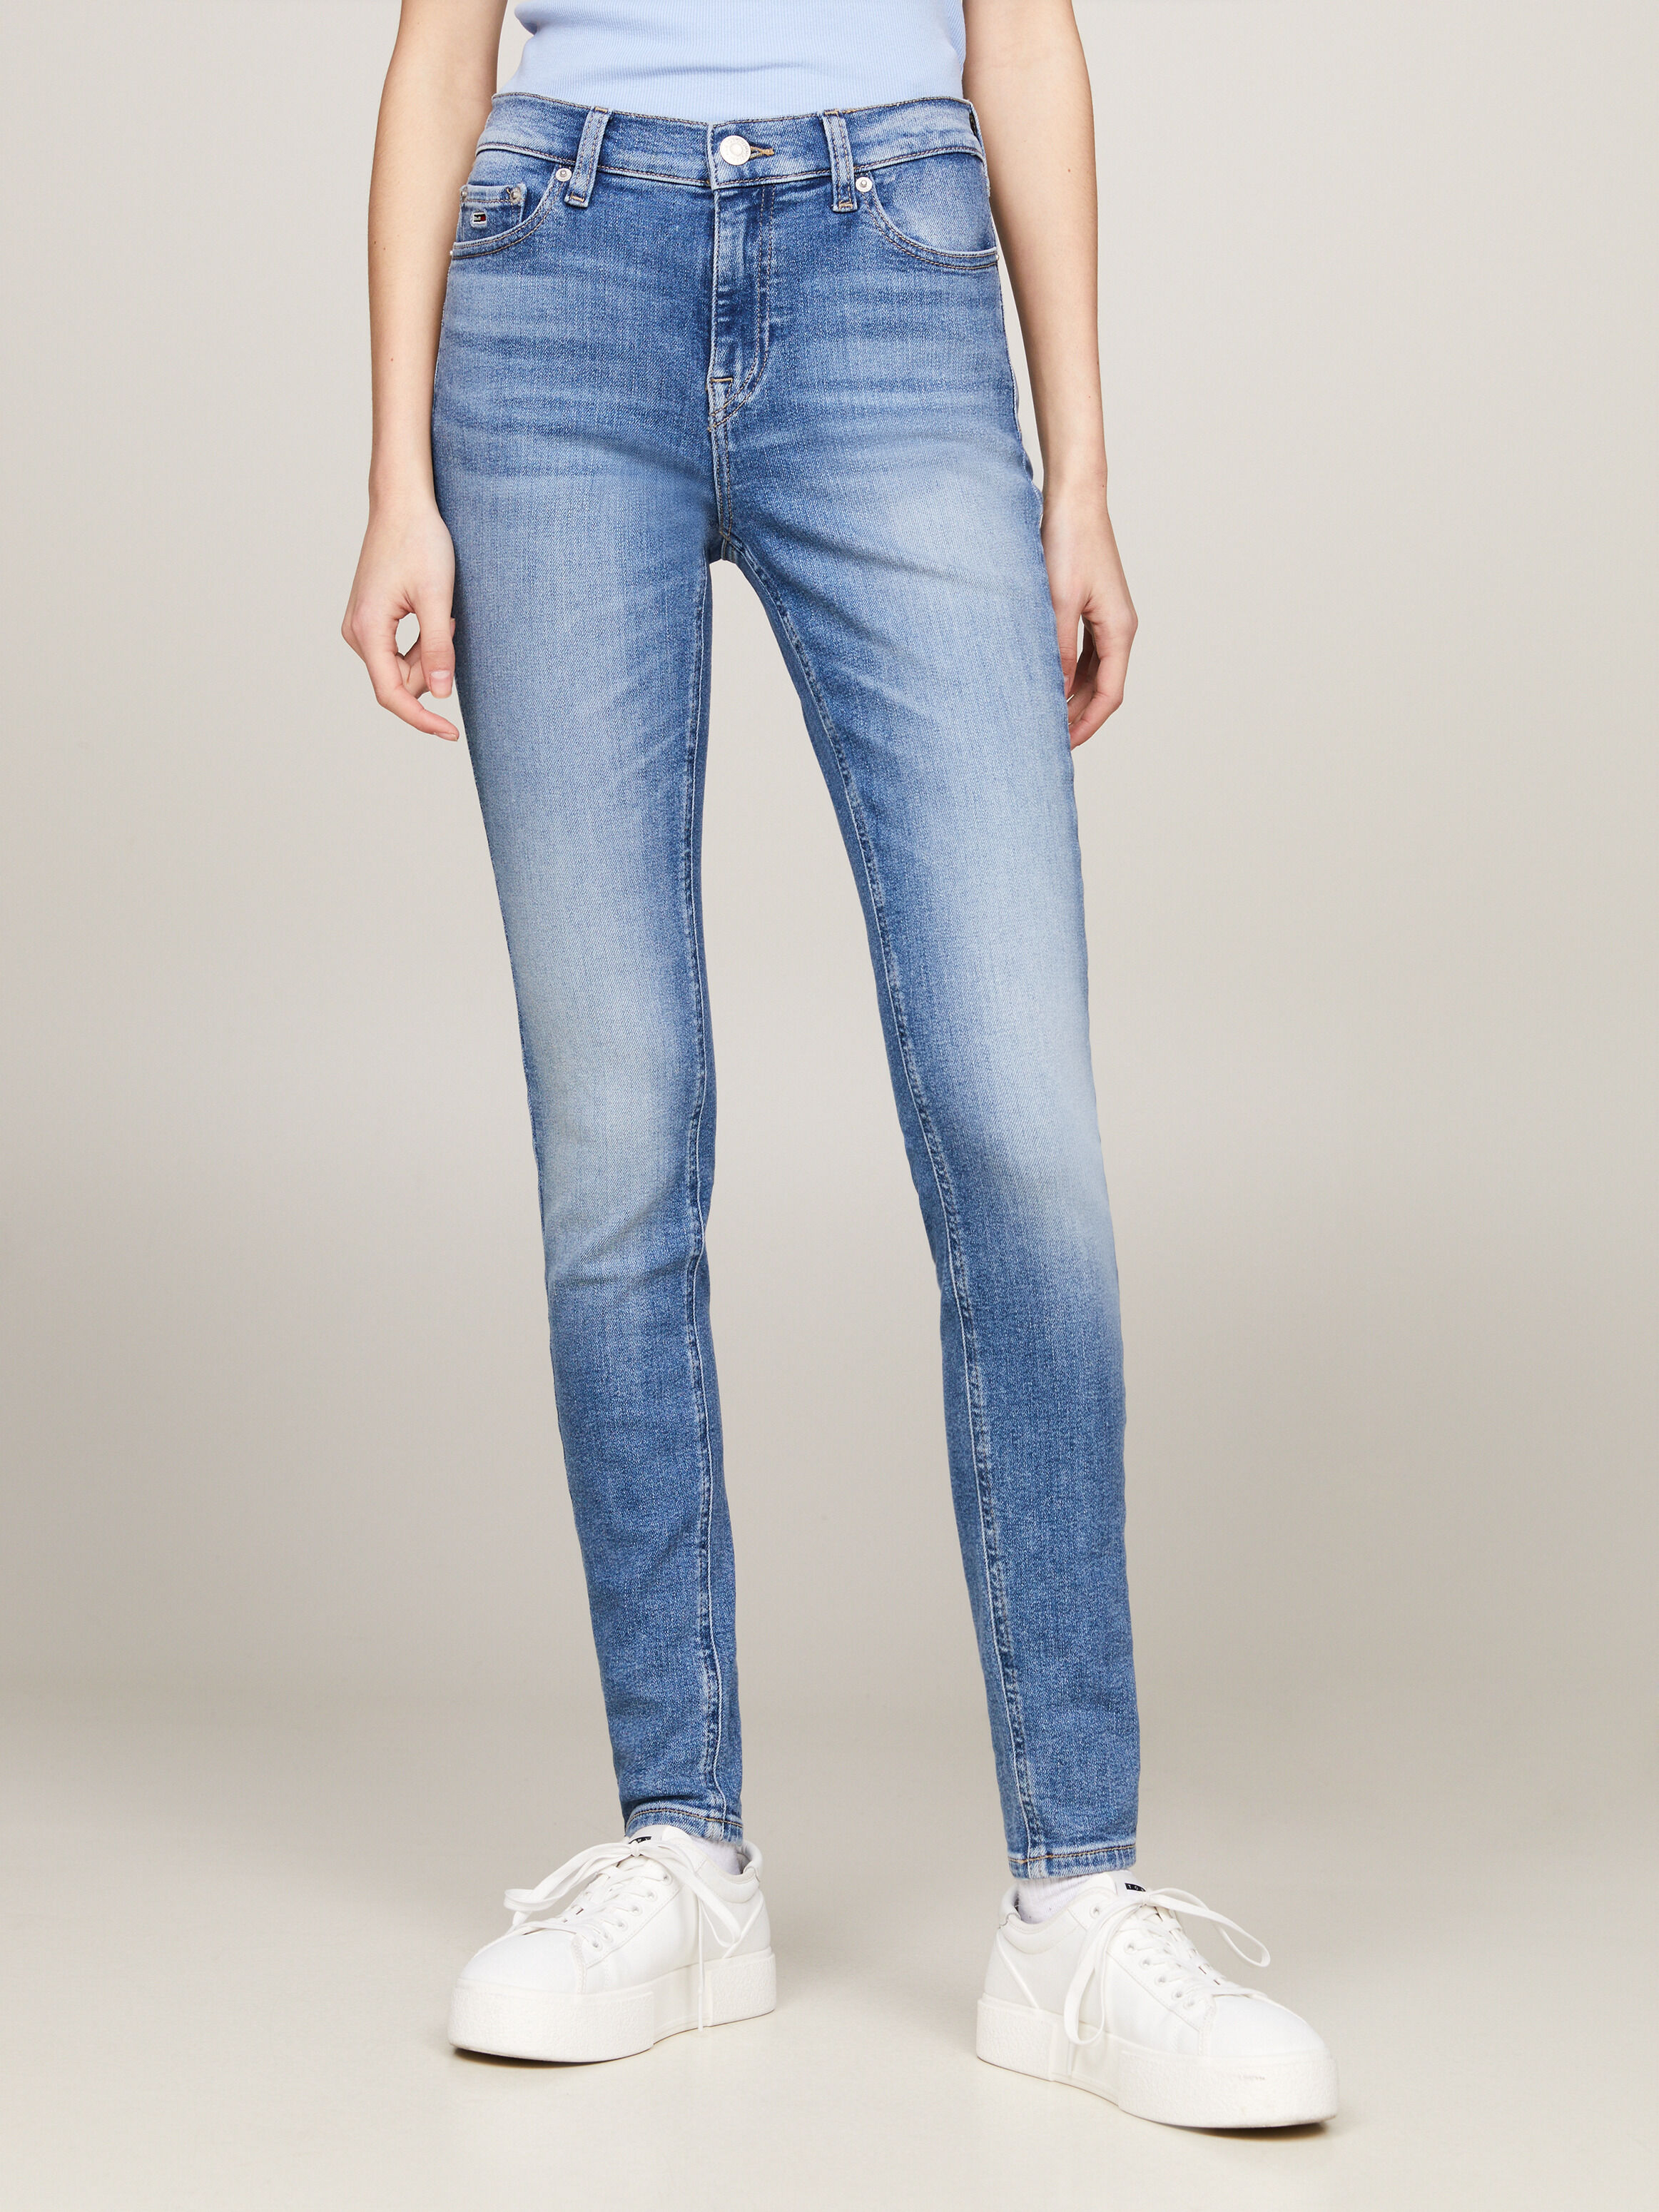 Vintage Tommy Hilfiger Denim Jeans Women's Size 1 Straight Classic Fit |  eBay